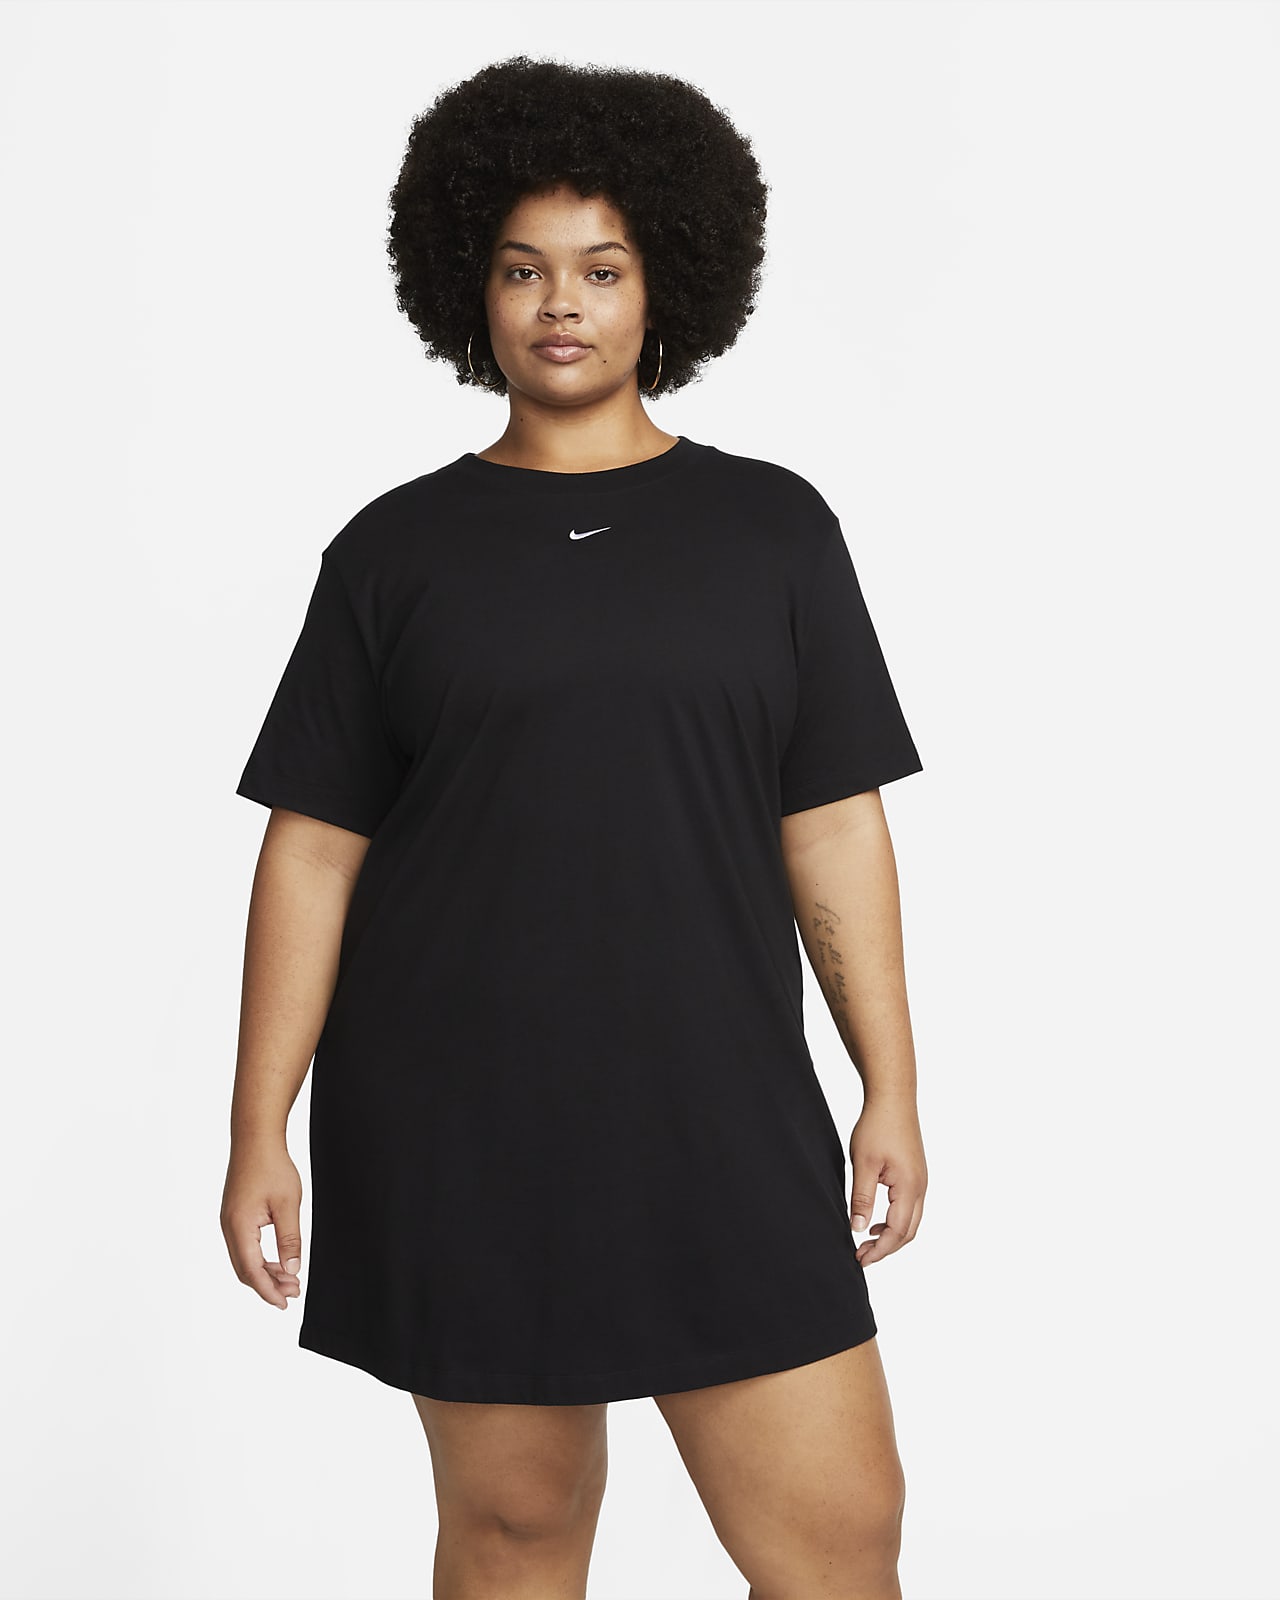 Sportswear Short-Sleeve T-Shirt Dress (Plus Size). Nike.com